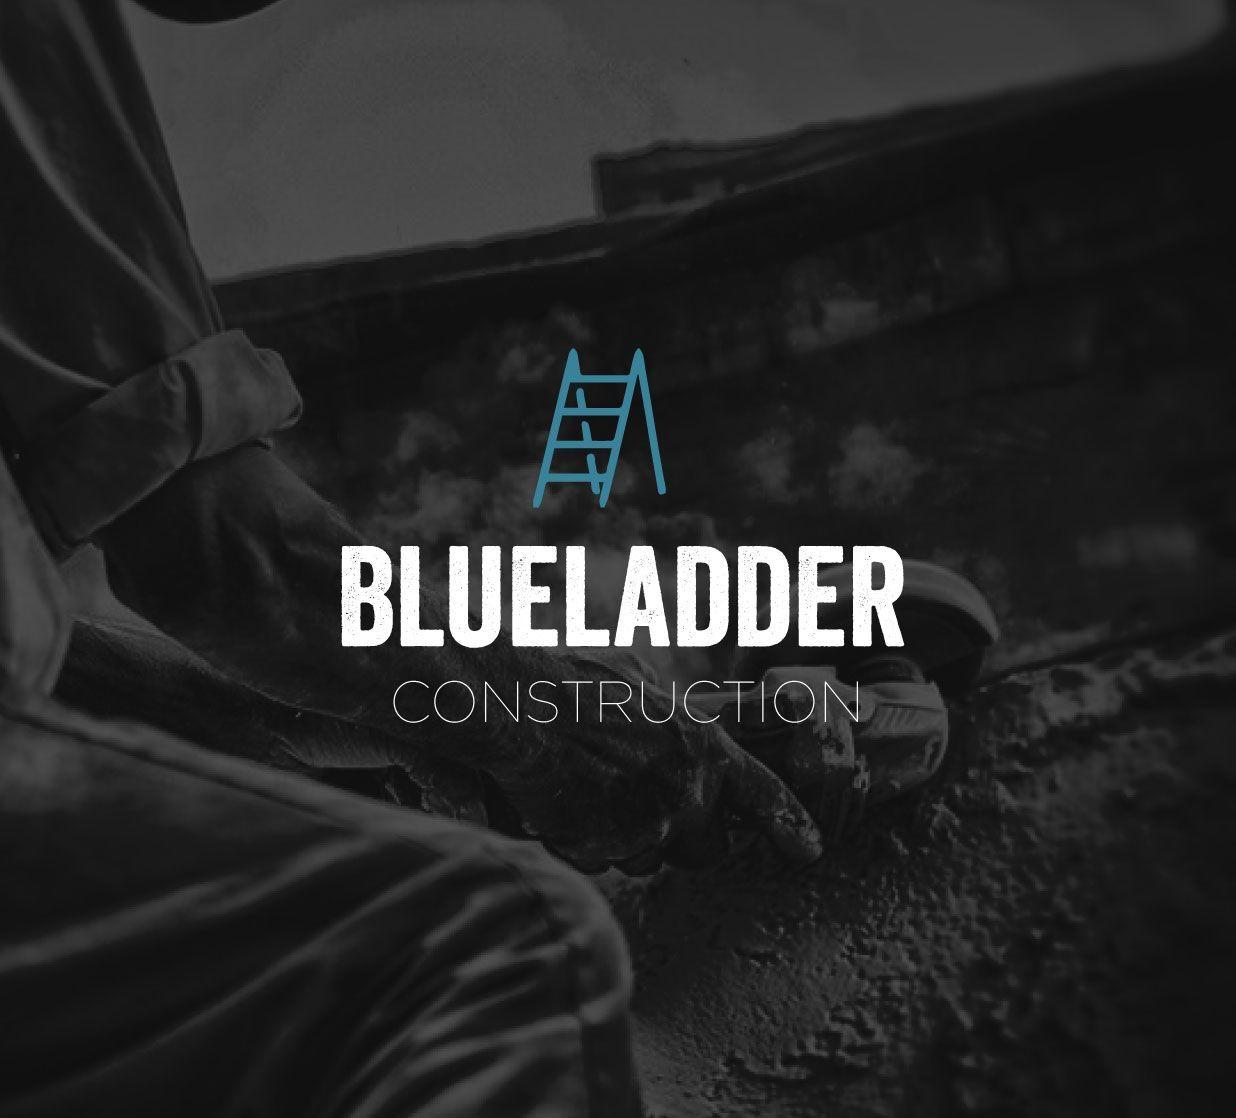 Cool Construction Company Logo - Construction Company Name Ideas | Construction Company Marketing ...